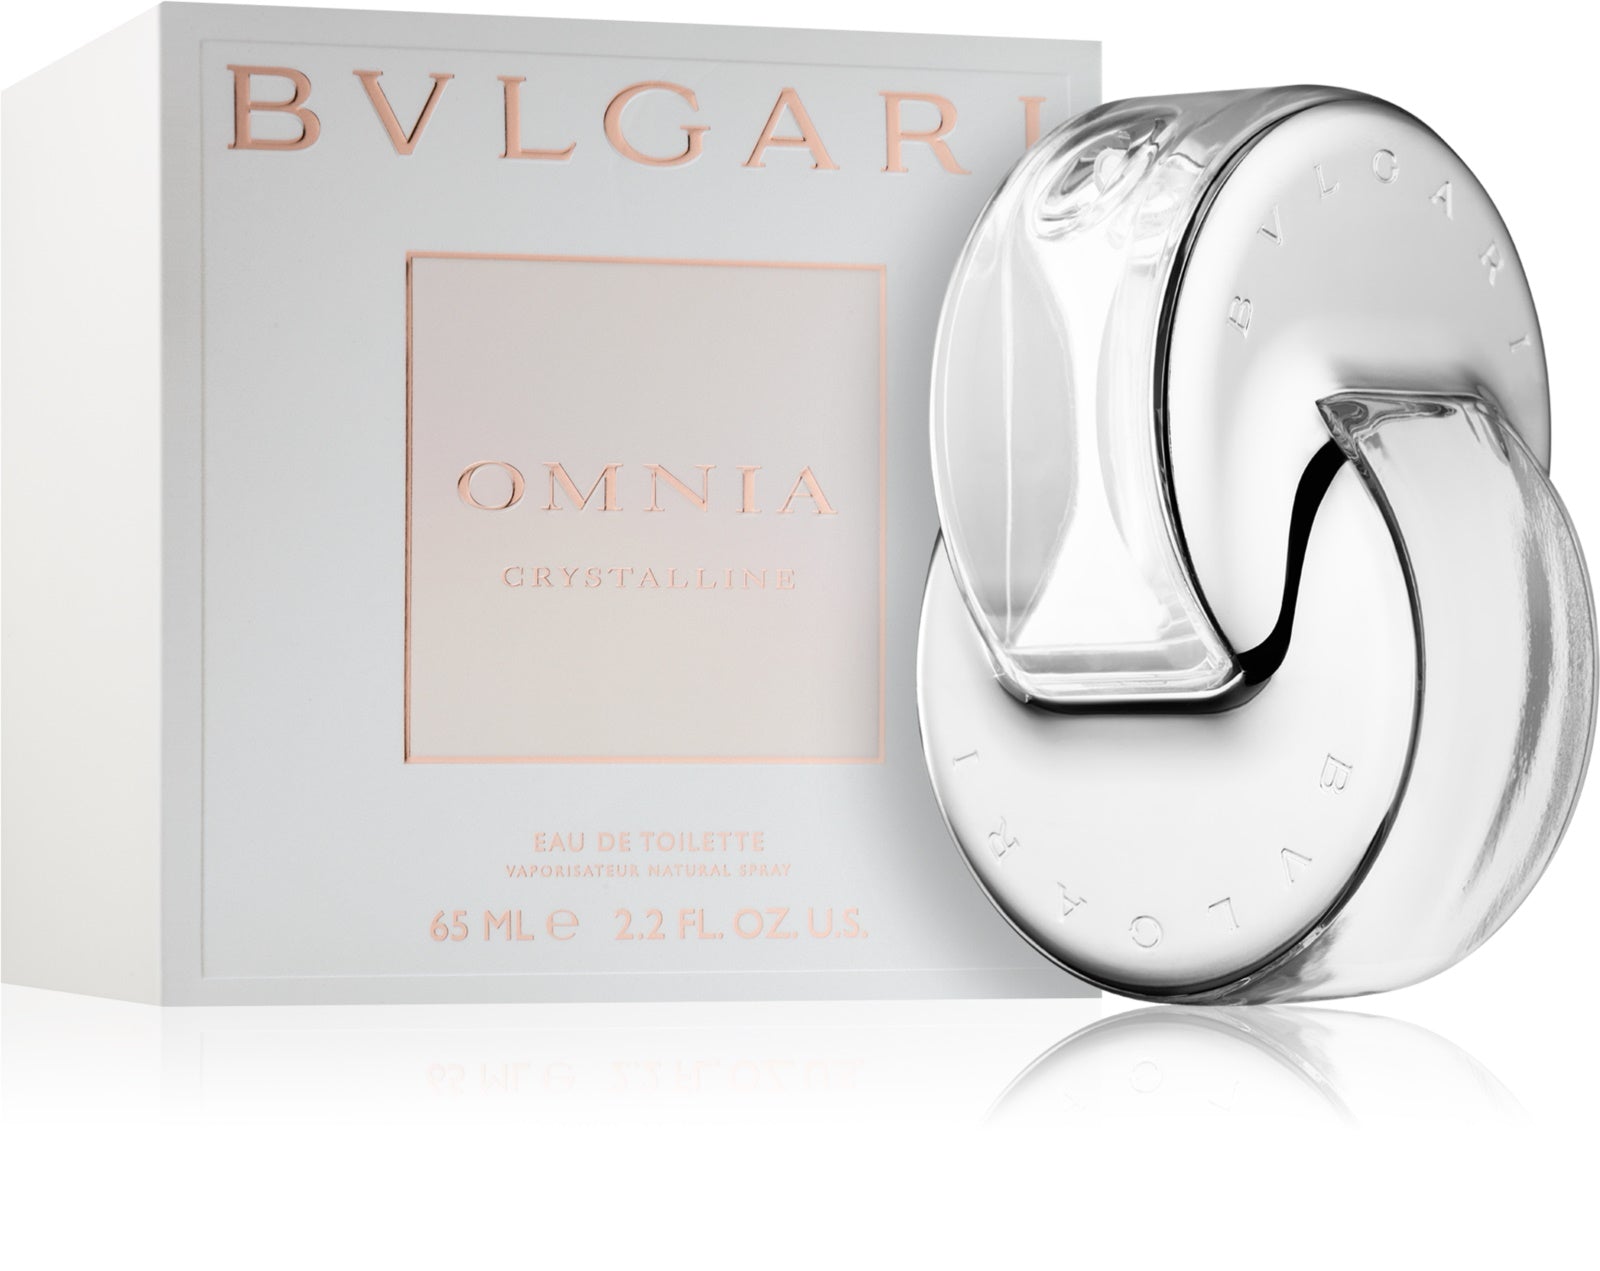 BVLGARI Omnia Crystalline EDT | Perfume Planet